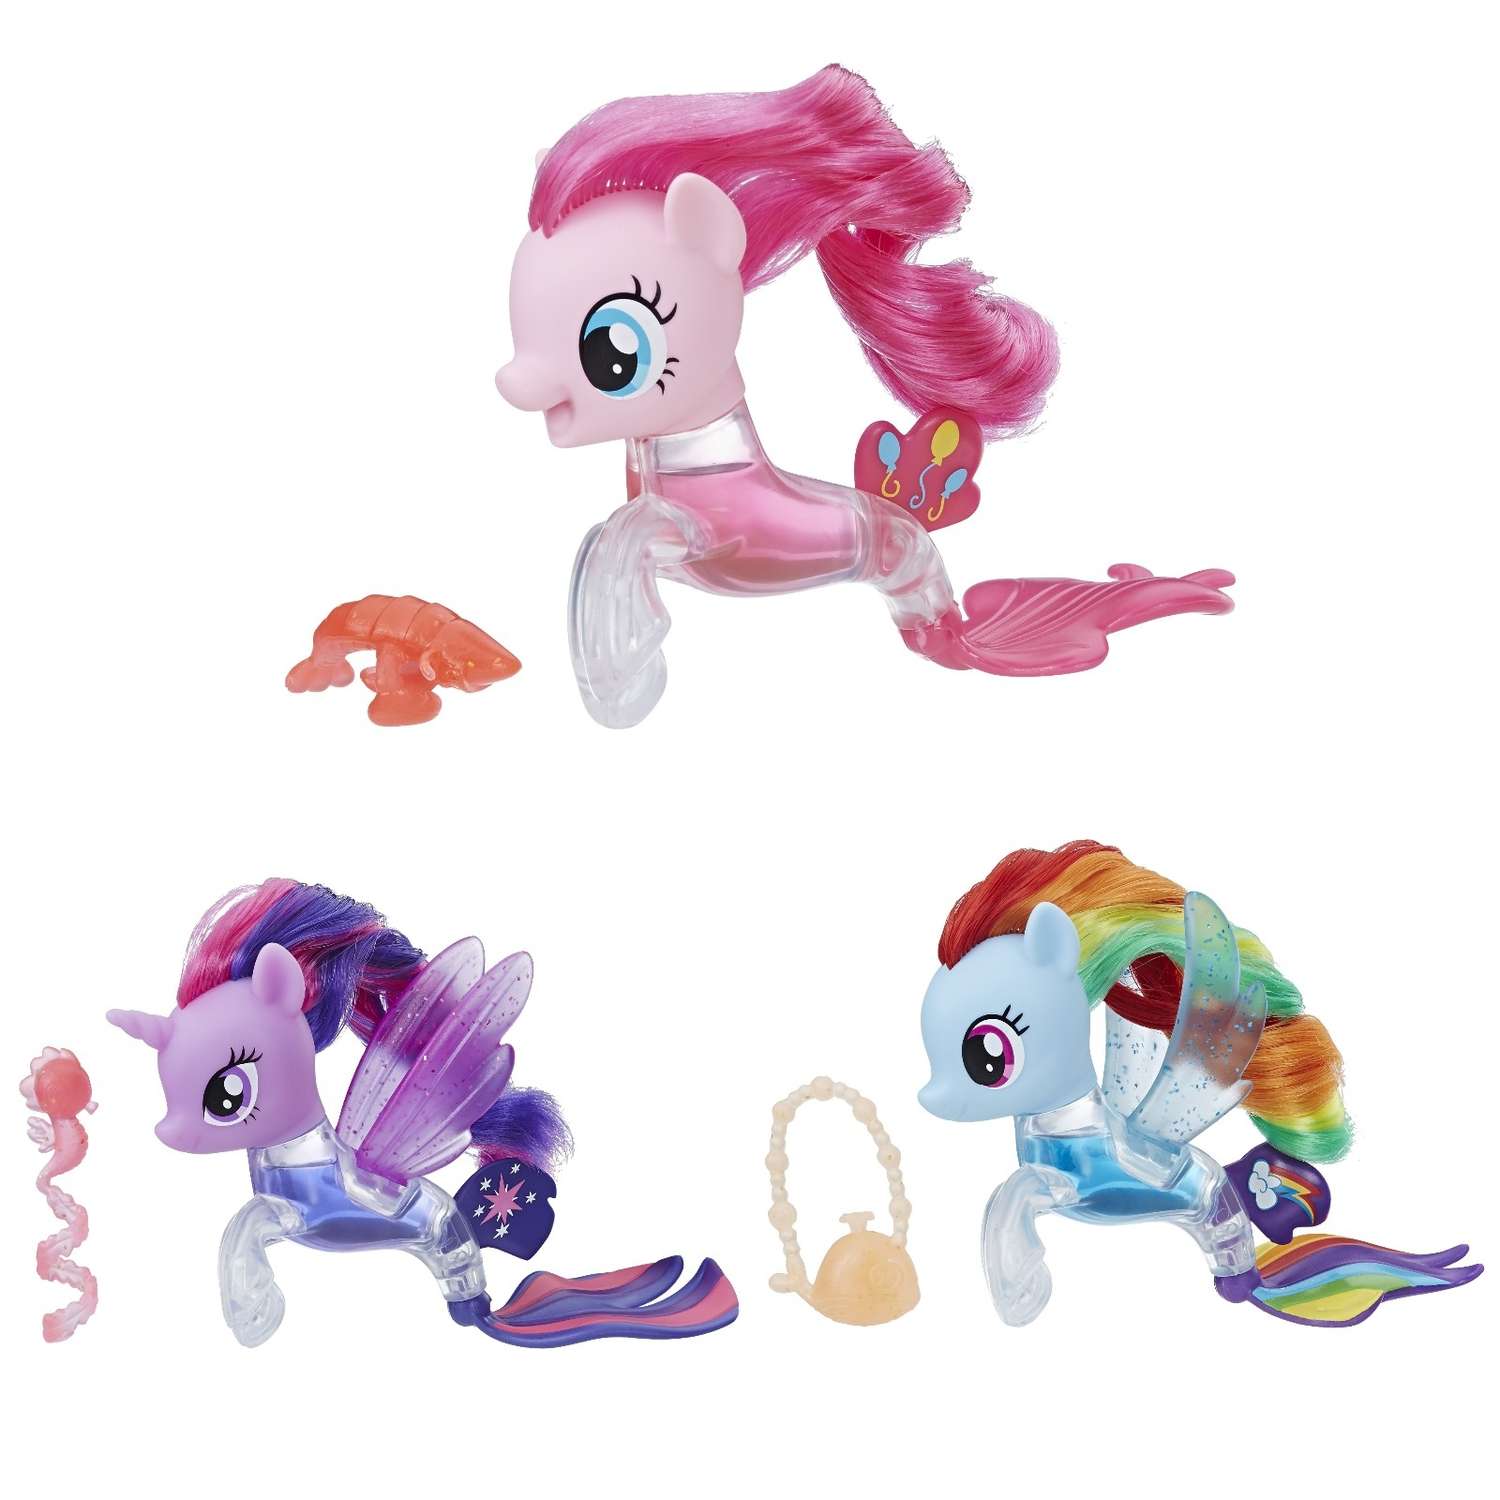 Игрушка My Little Pony Пони подружки в ассортименте E0188EU4 - фото 1